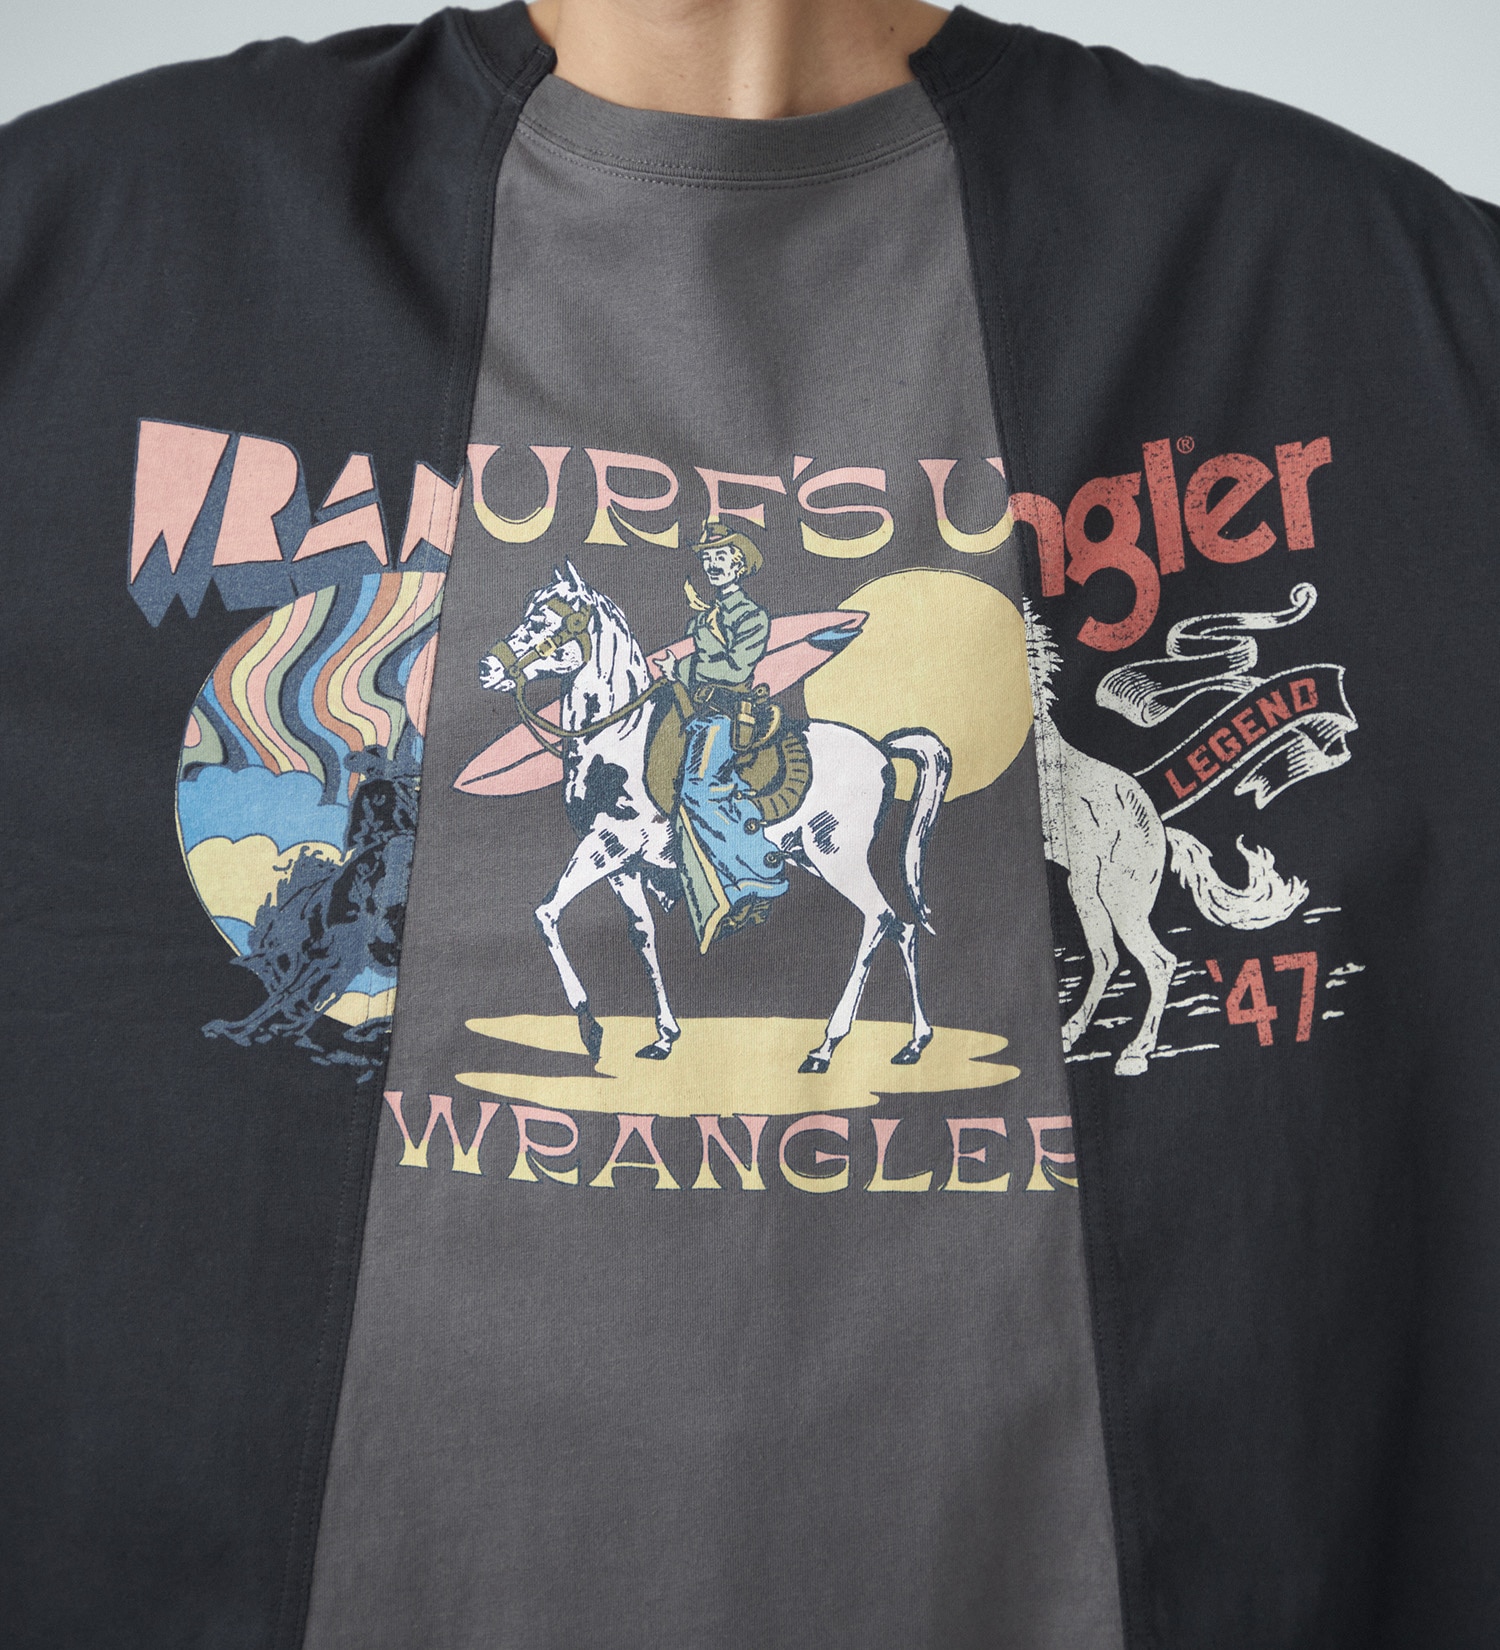 Wrangler(ラングラー)のリメイク ショートスリーブTee|トップス/Tシャツ/カットソー/メンズ|チャコールグレー